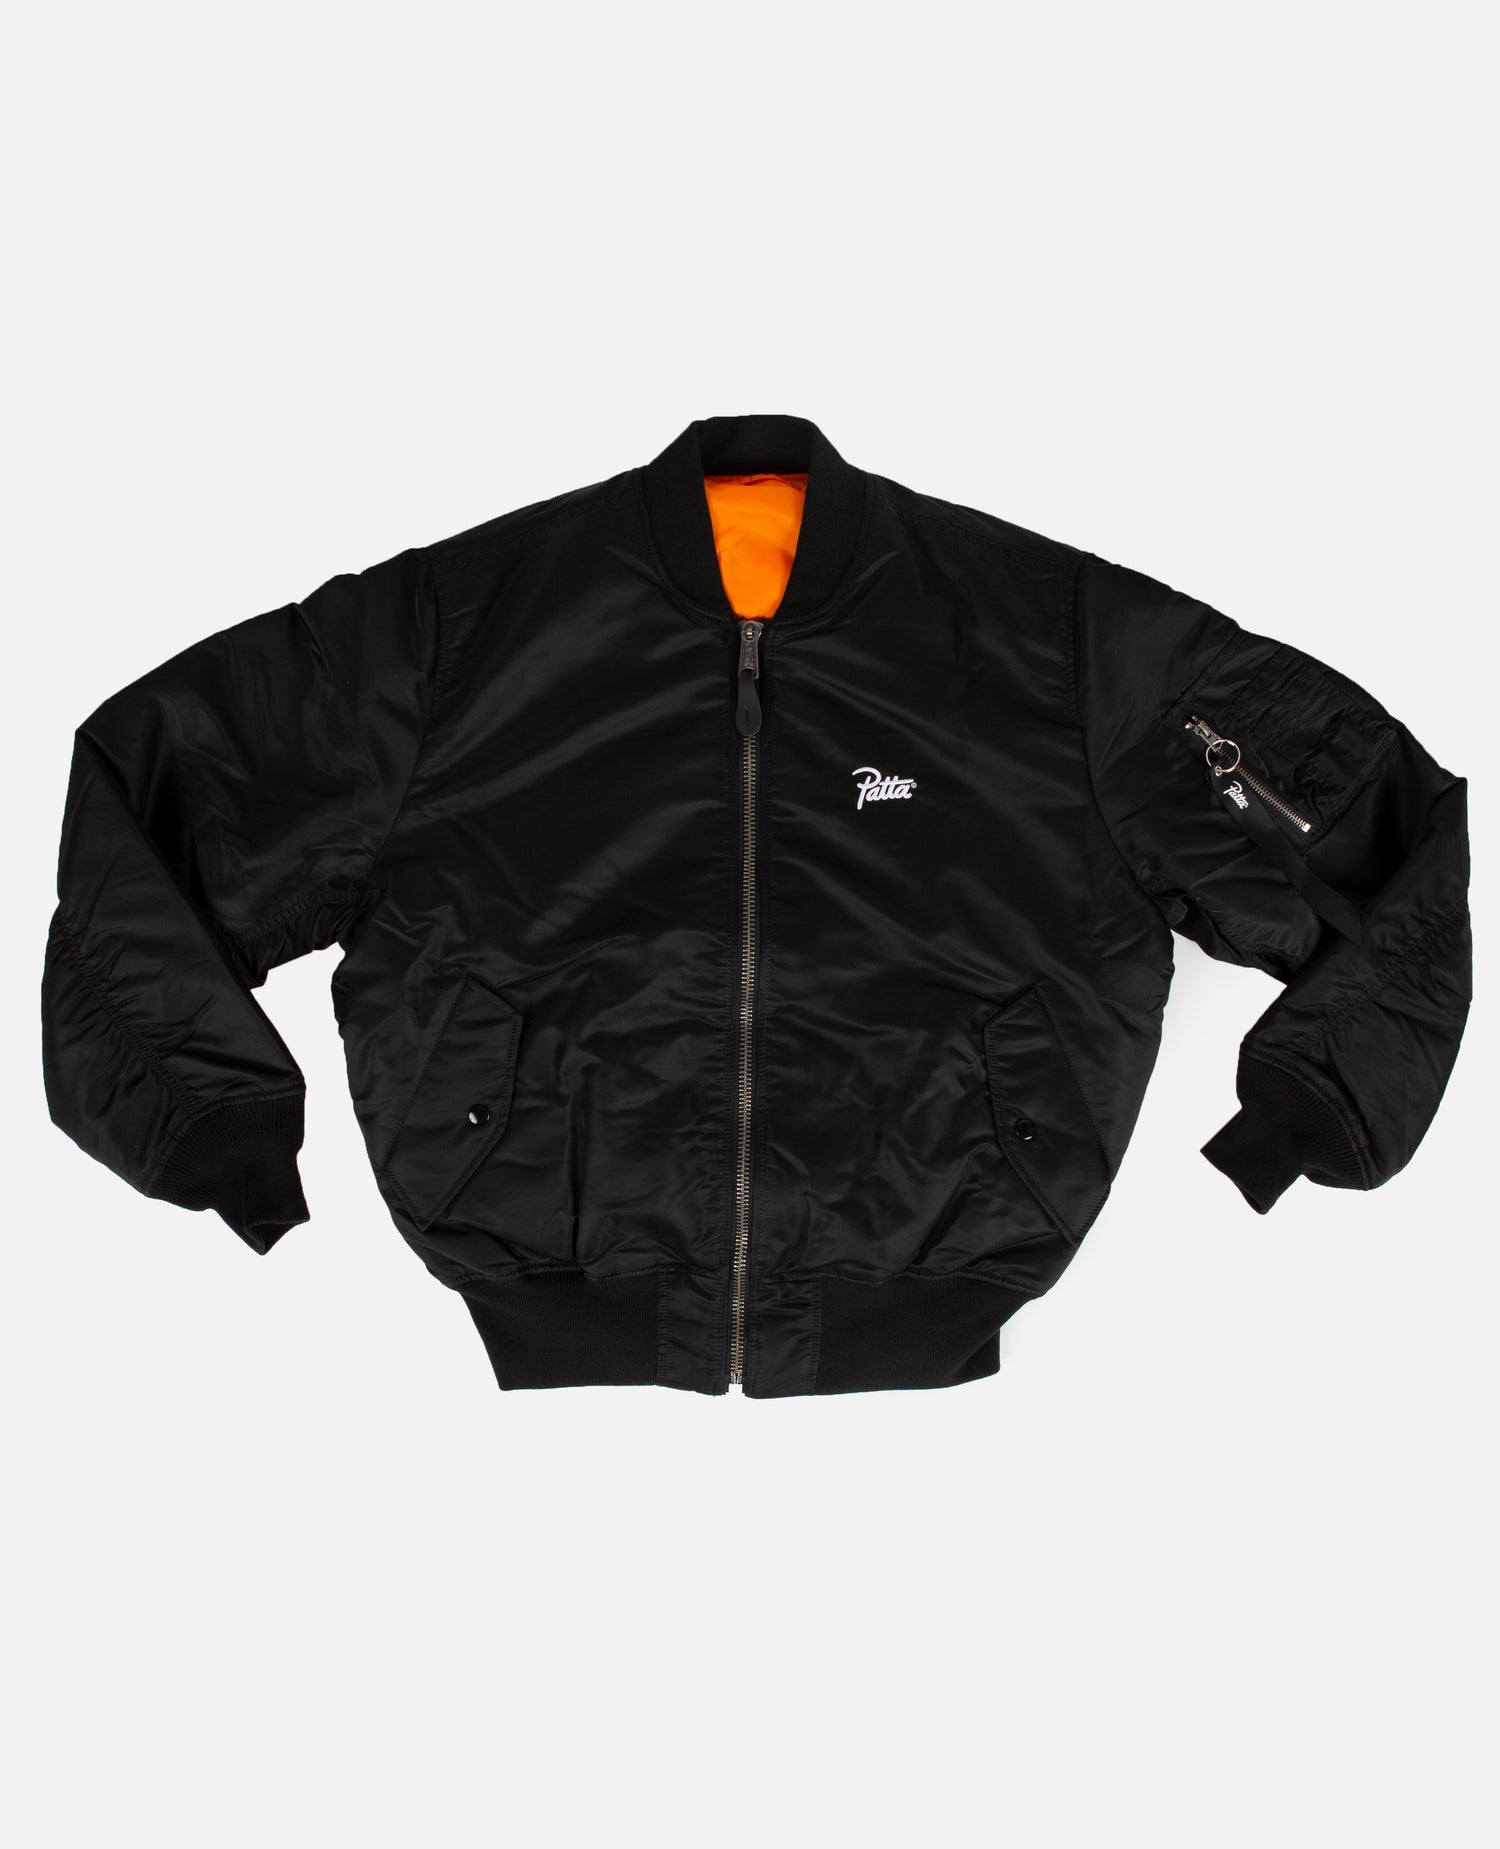 Store Exclusive: Patta x Alpha Industries MA-1 Amsterdam Jacket (Black/Orange)